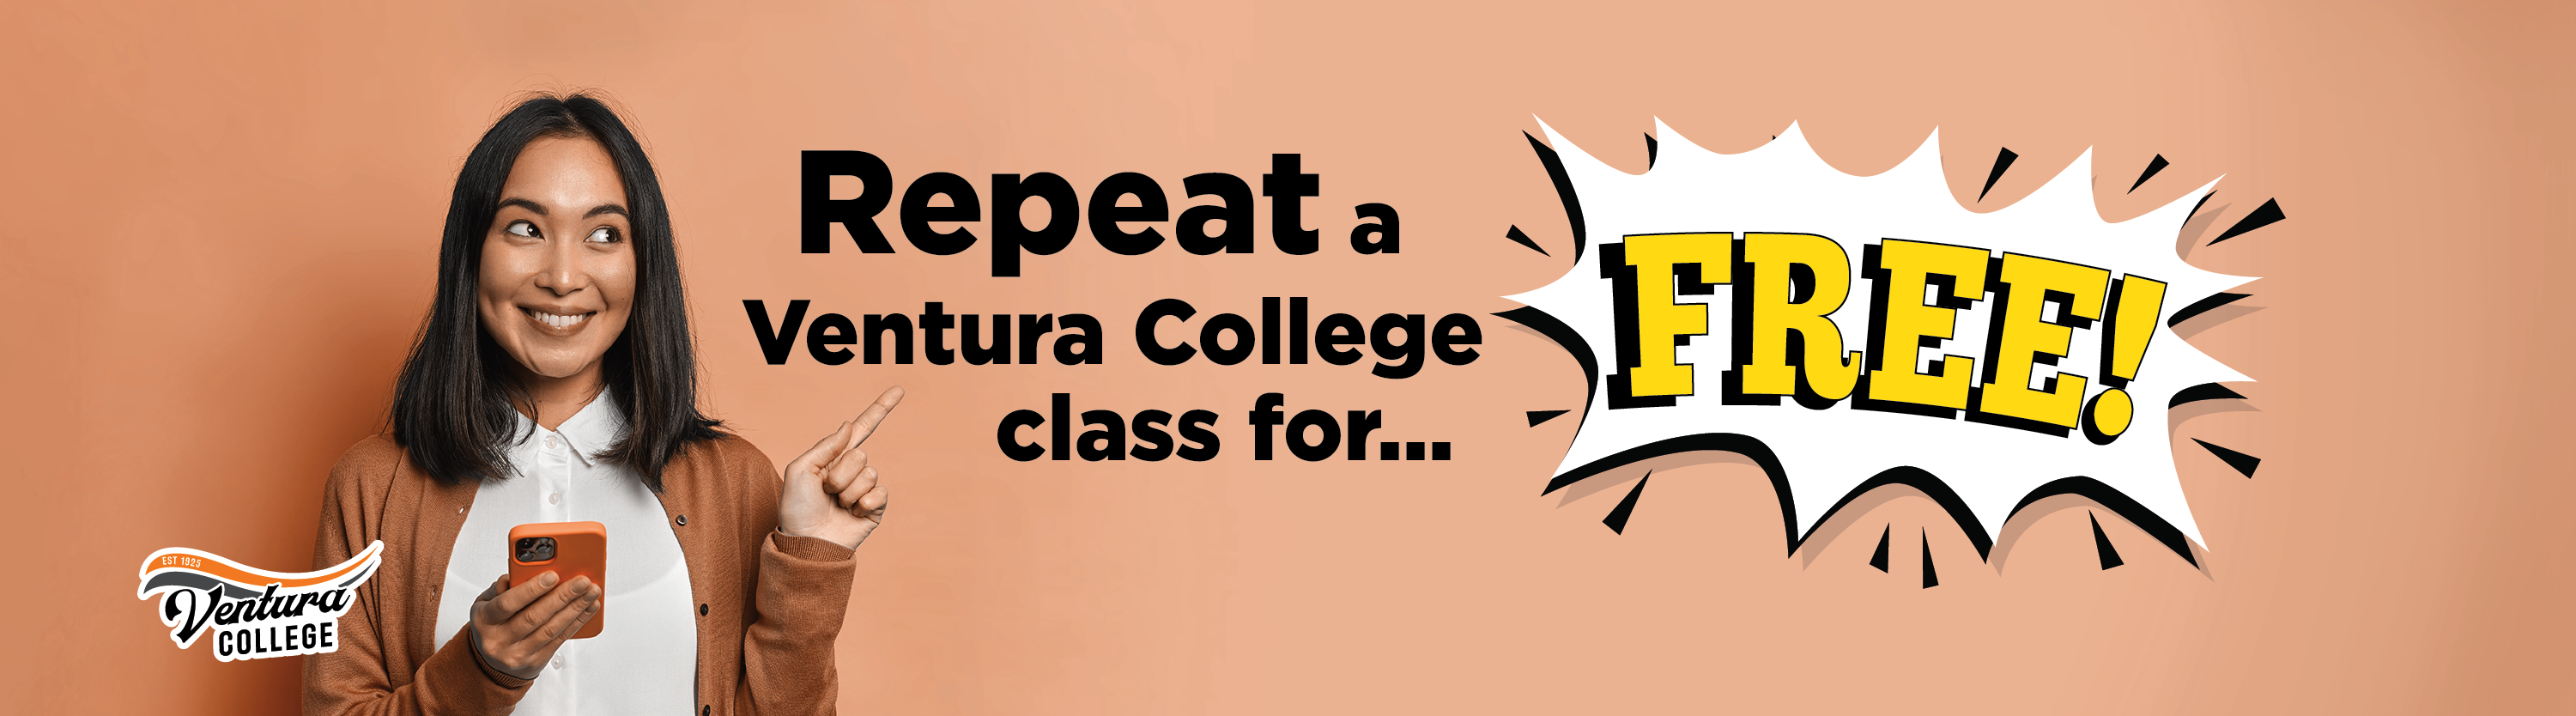 Repeat a Ventura College class for...FREE!